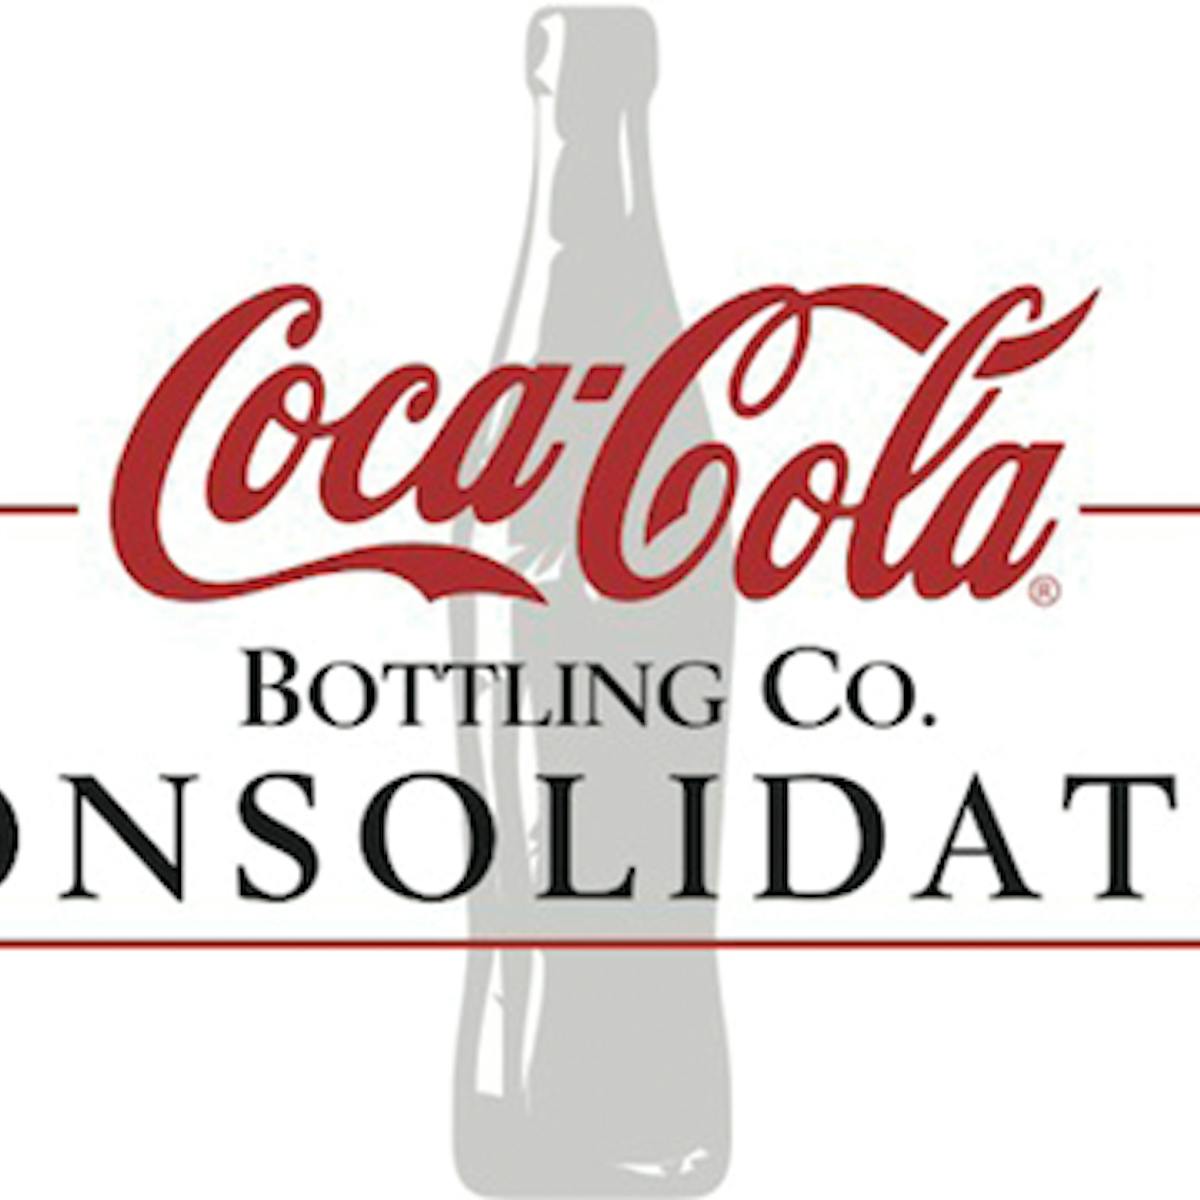 Coca Cola Consolidated Logo 11456352